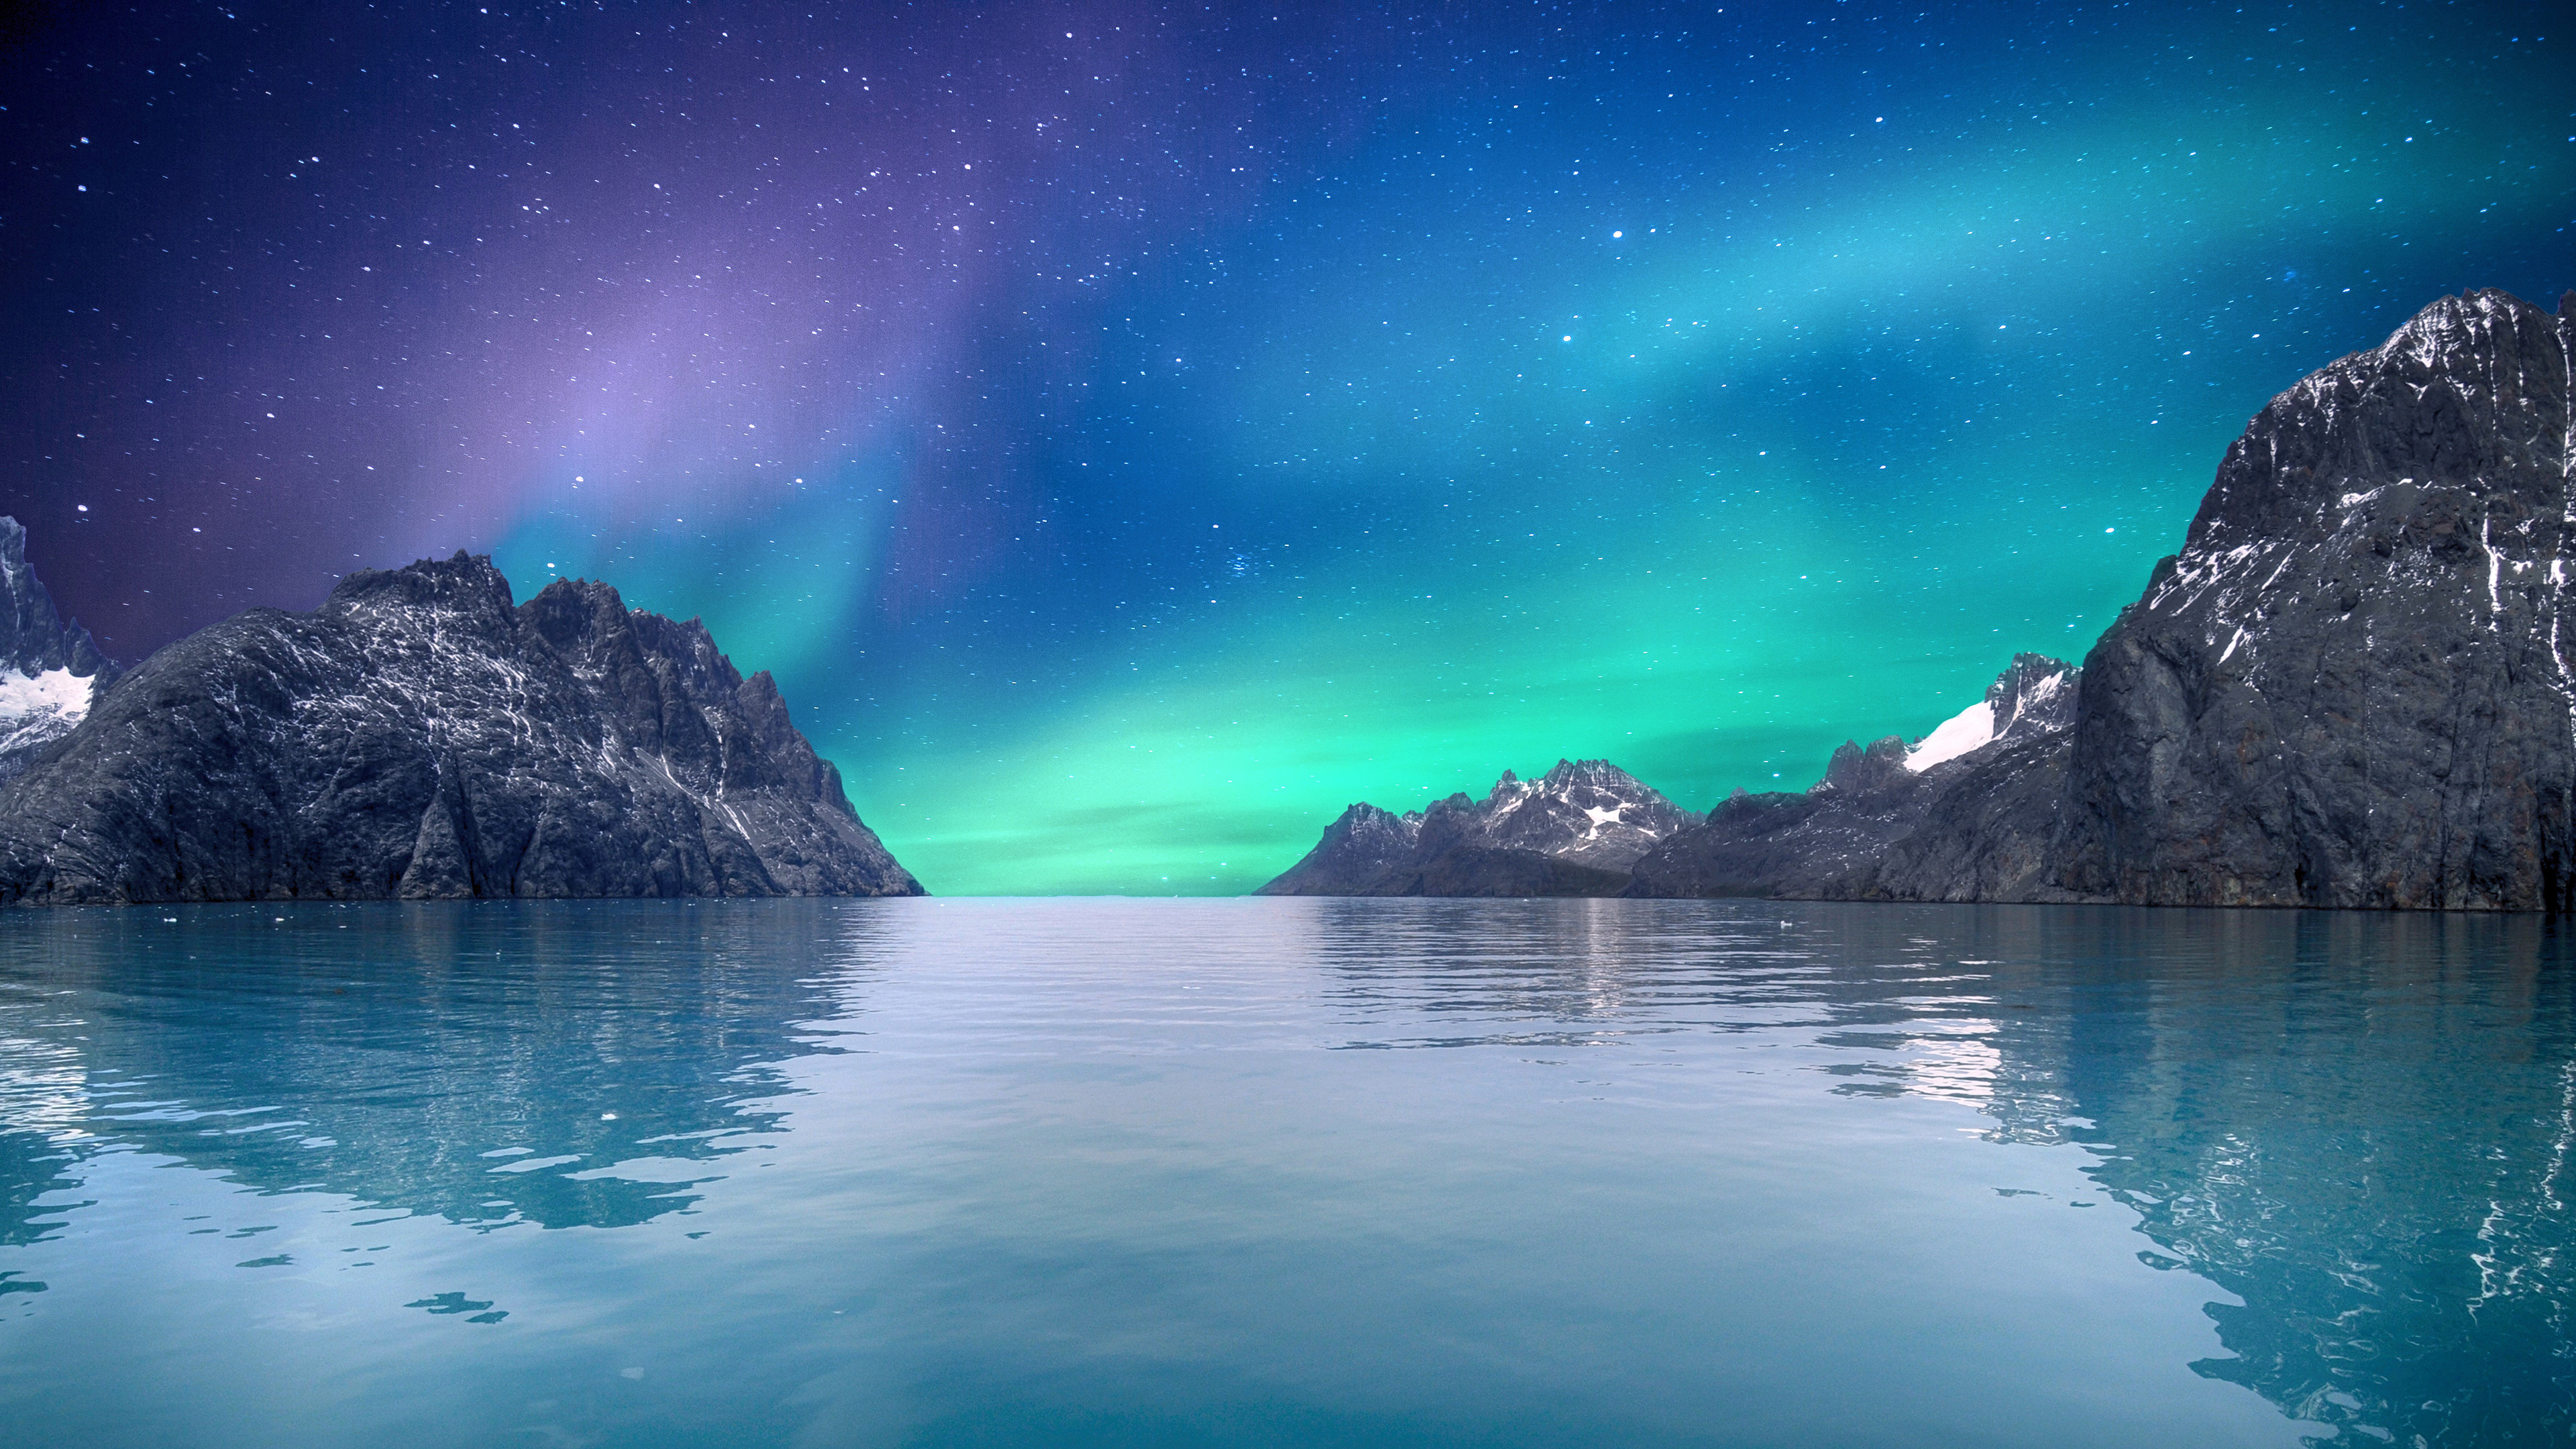 Aurora Borealis 4k Ultra HD Wallpaper Background Image